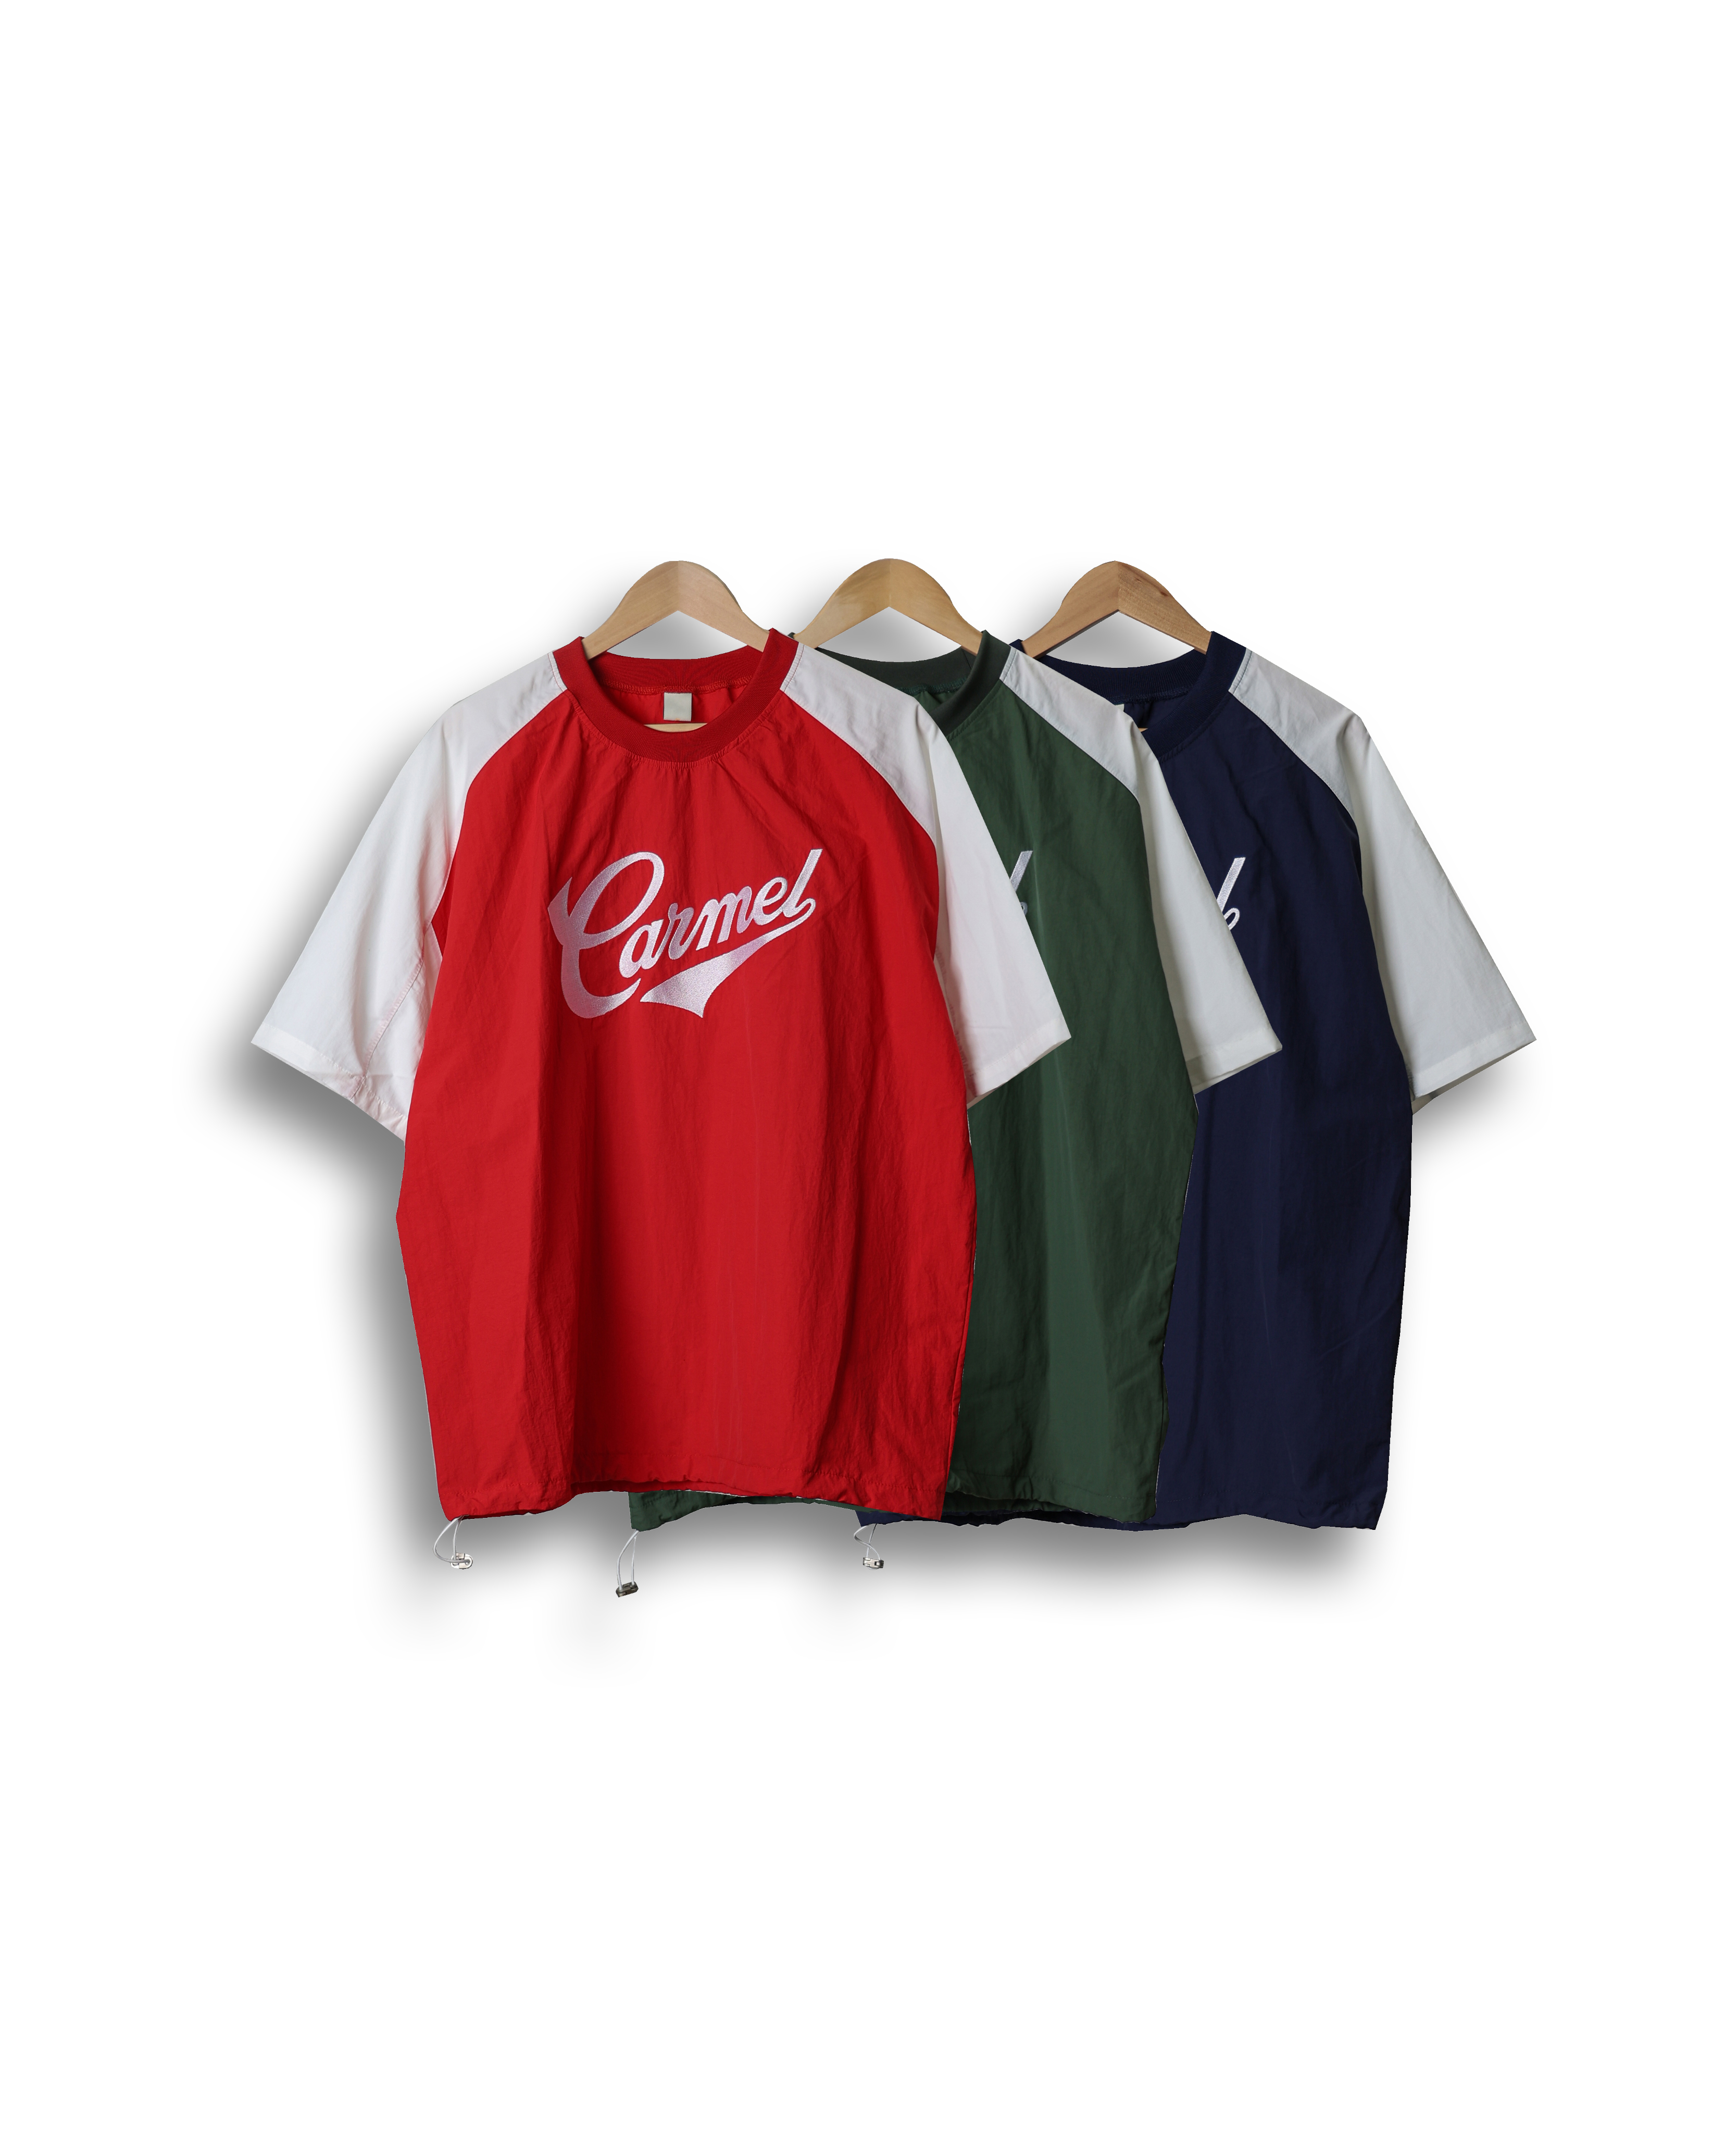 RAM CARMEL Colouring Nylon T Shirts (Navy/Green/Red)